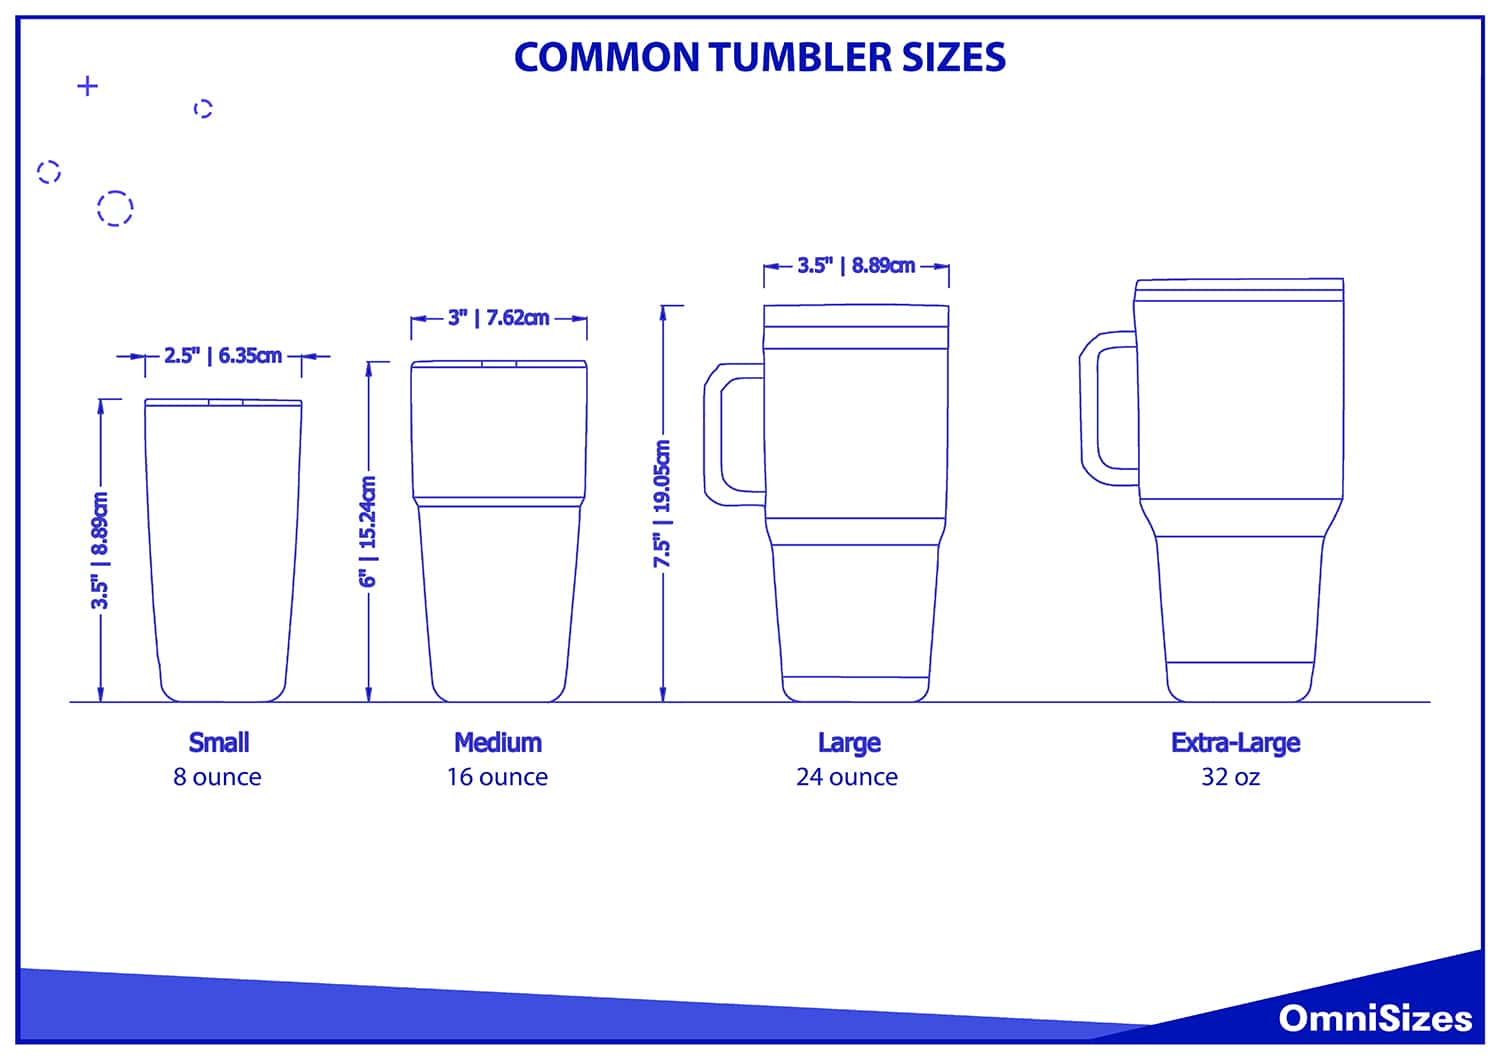 Common tumbler sizes